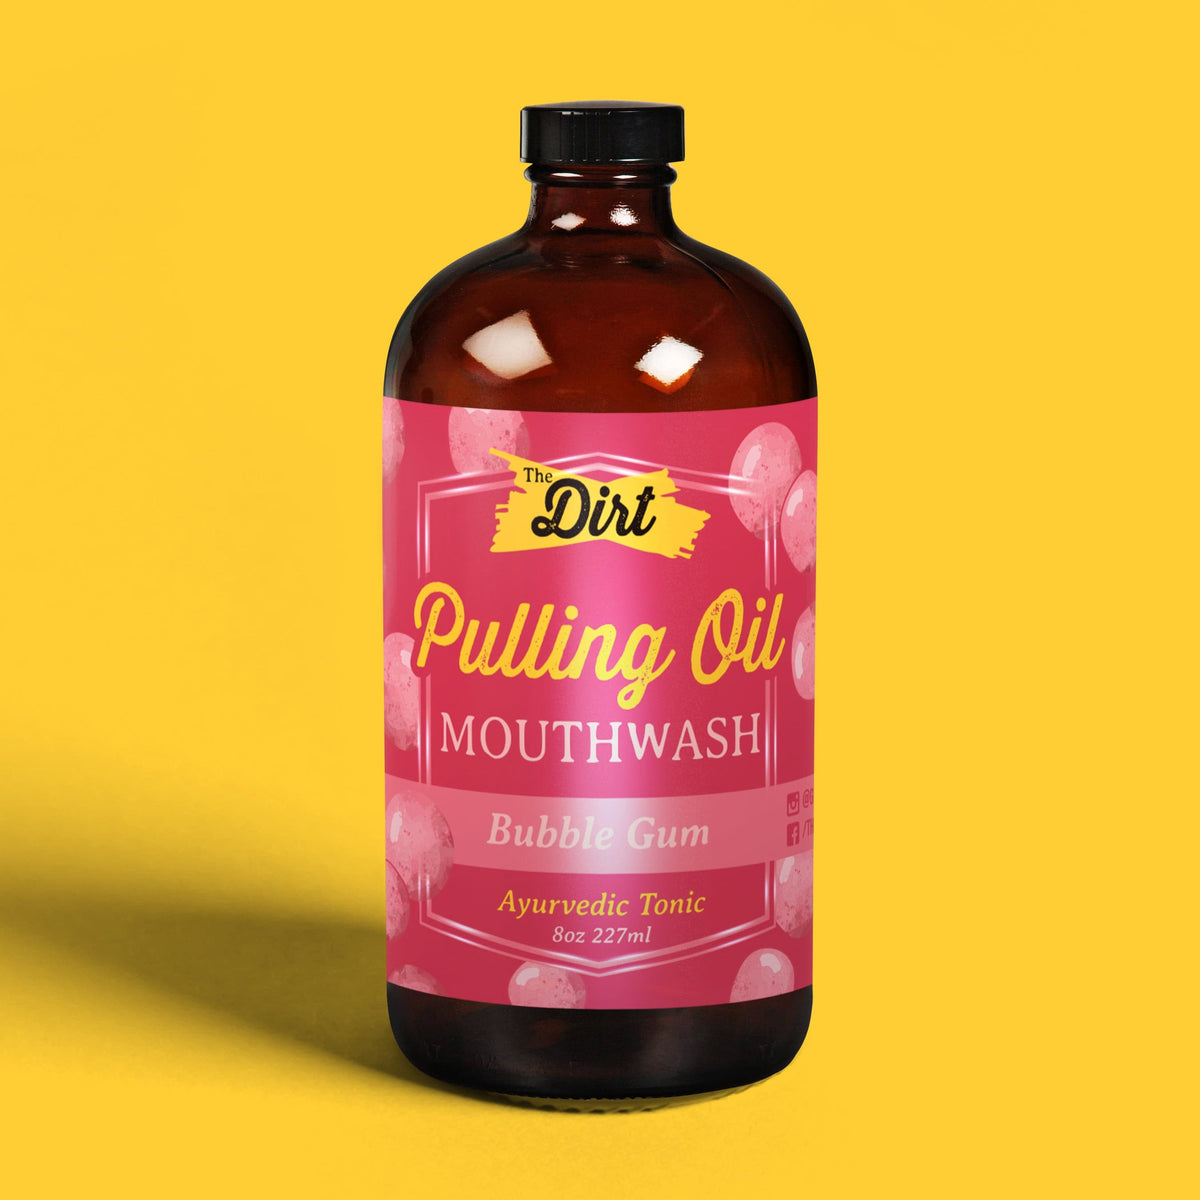 Buy with Prime Pulling Oil Mouthwash - The Dirt - Super Natural Oral Care 8oz / Bubblegum Oral Care